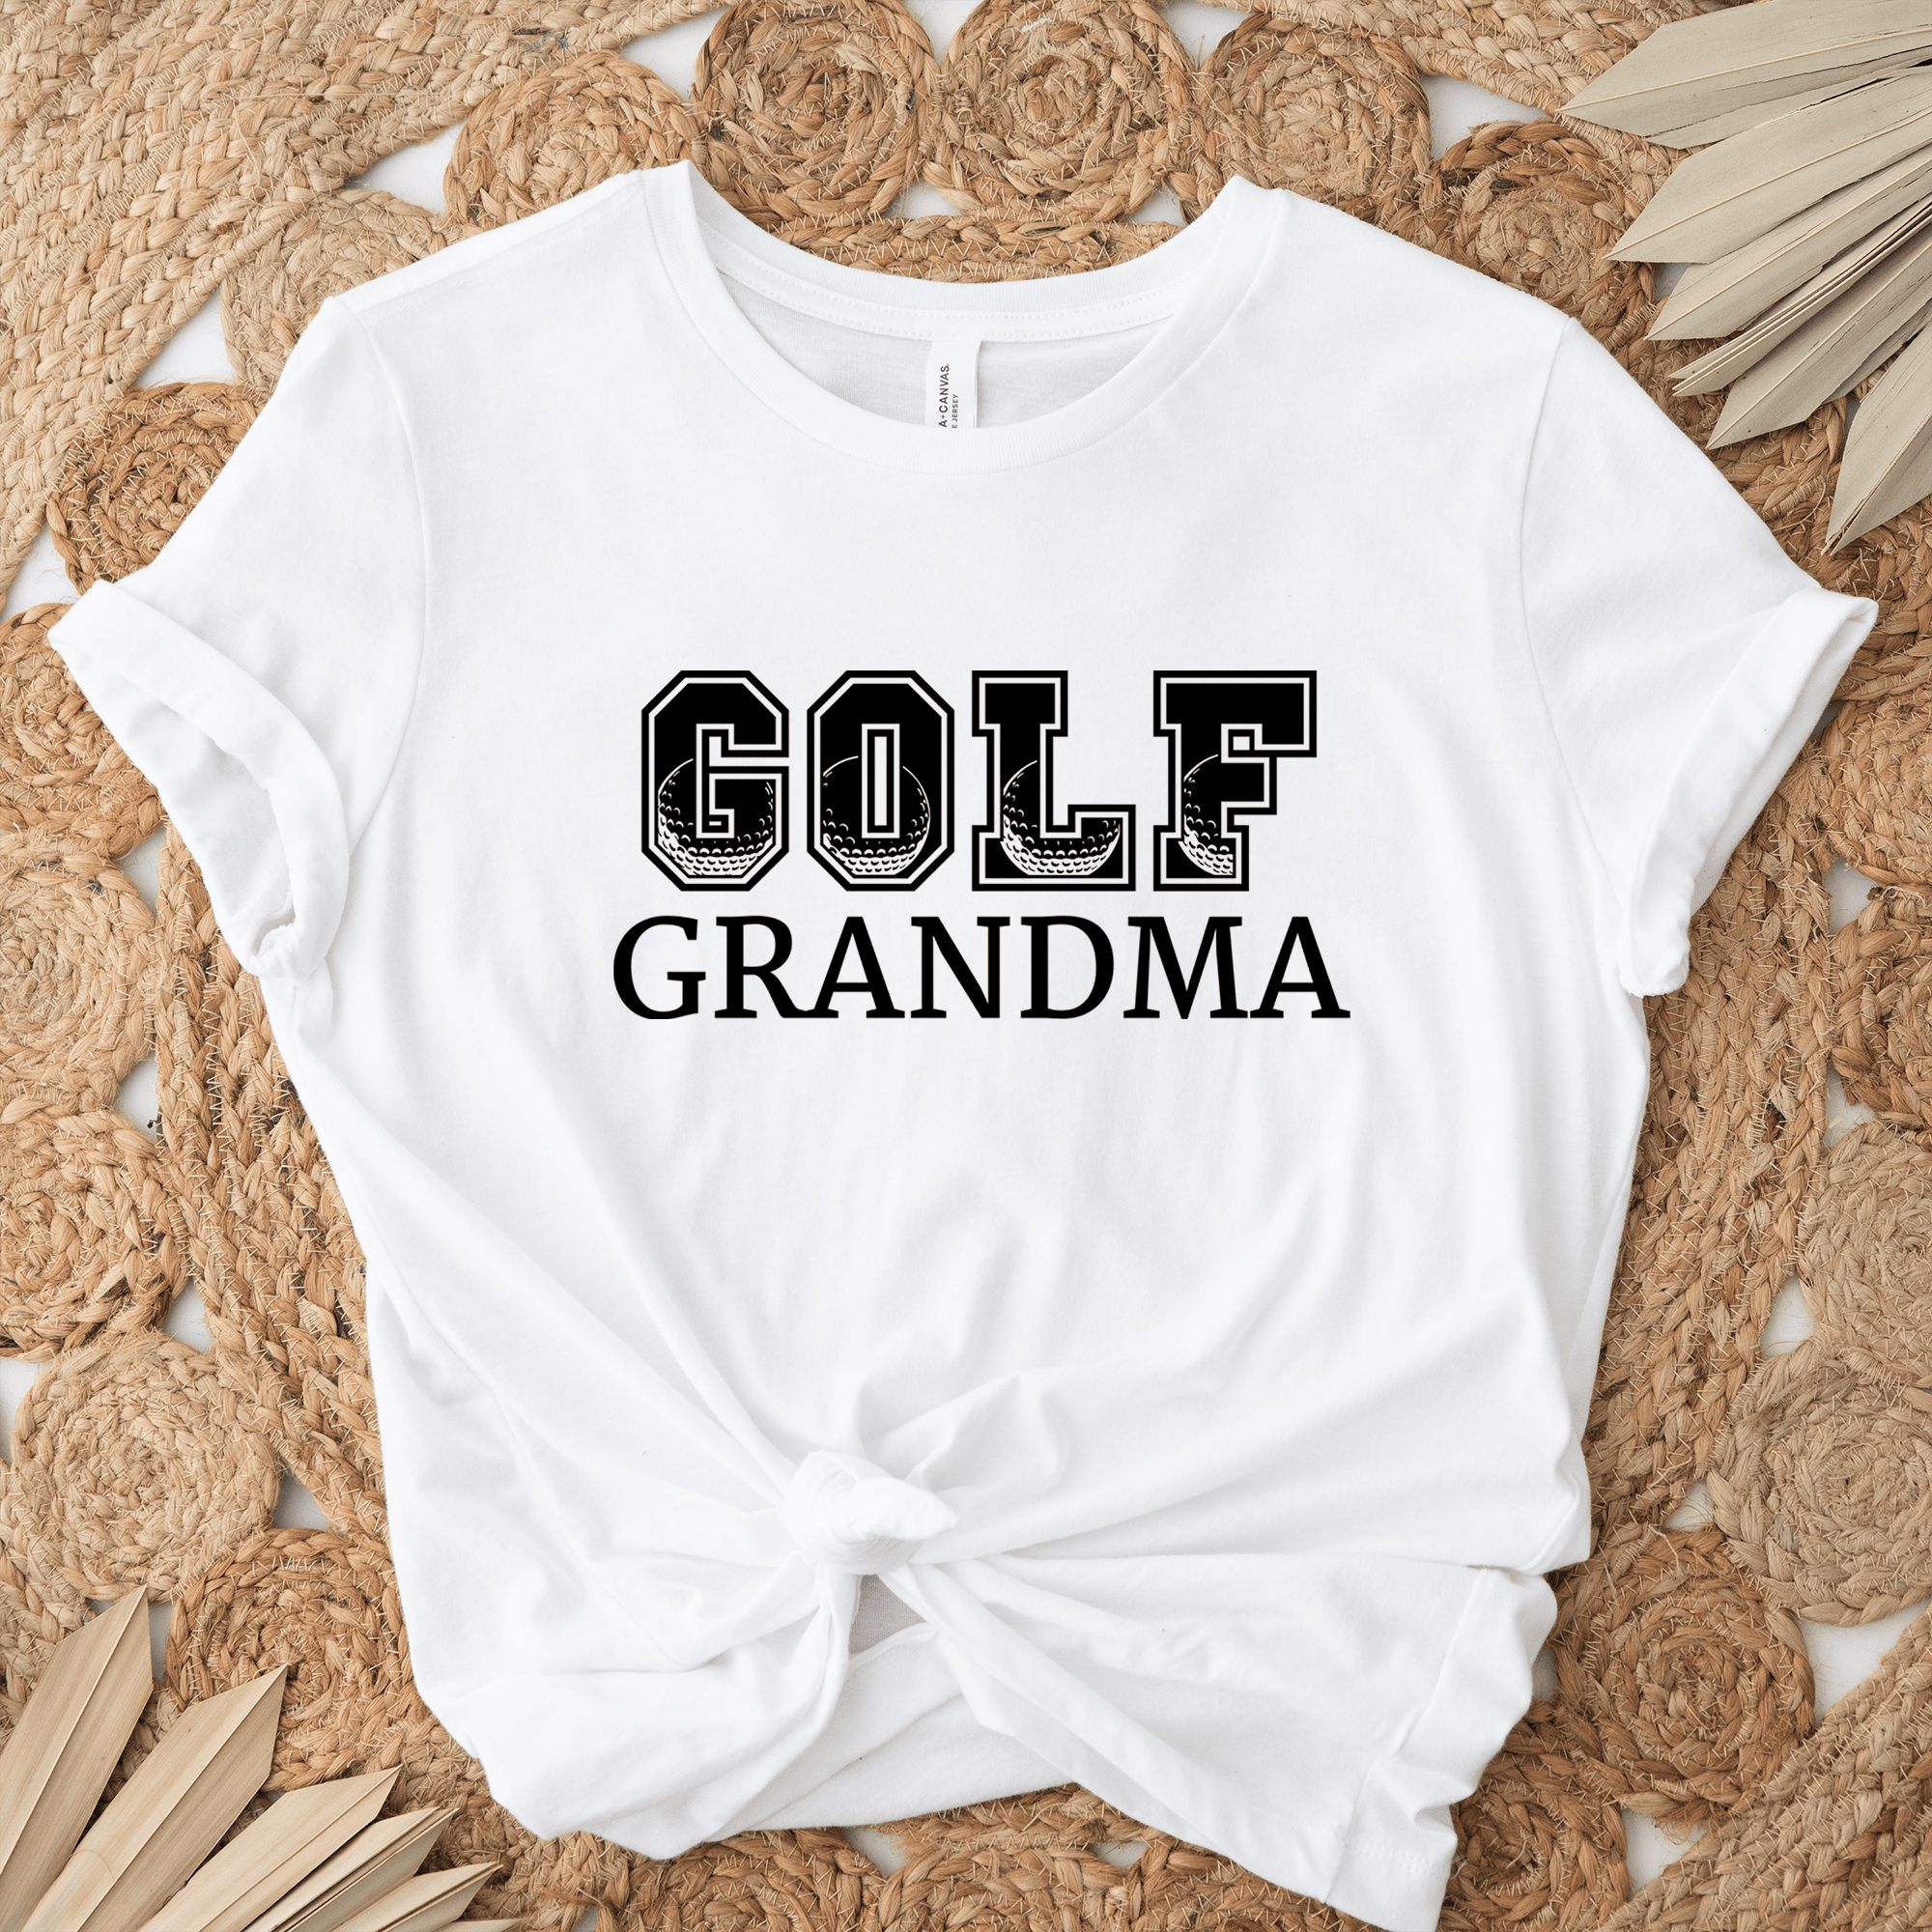 Womens White T Shirt with Golf-Grandma design